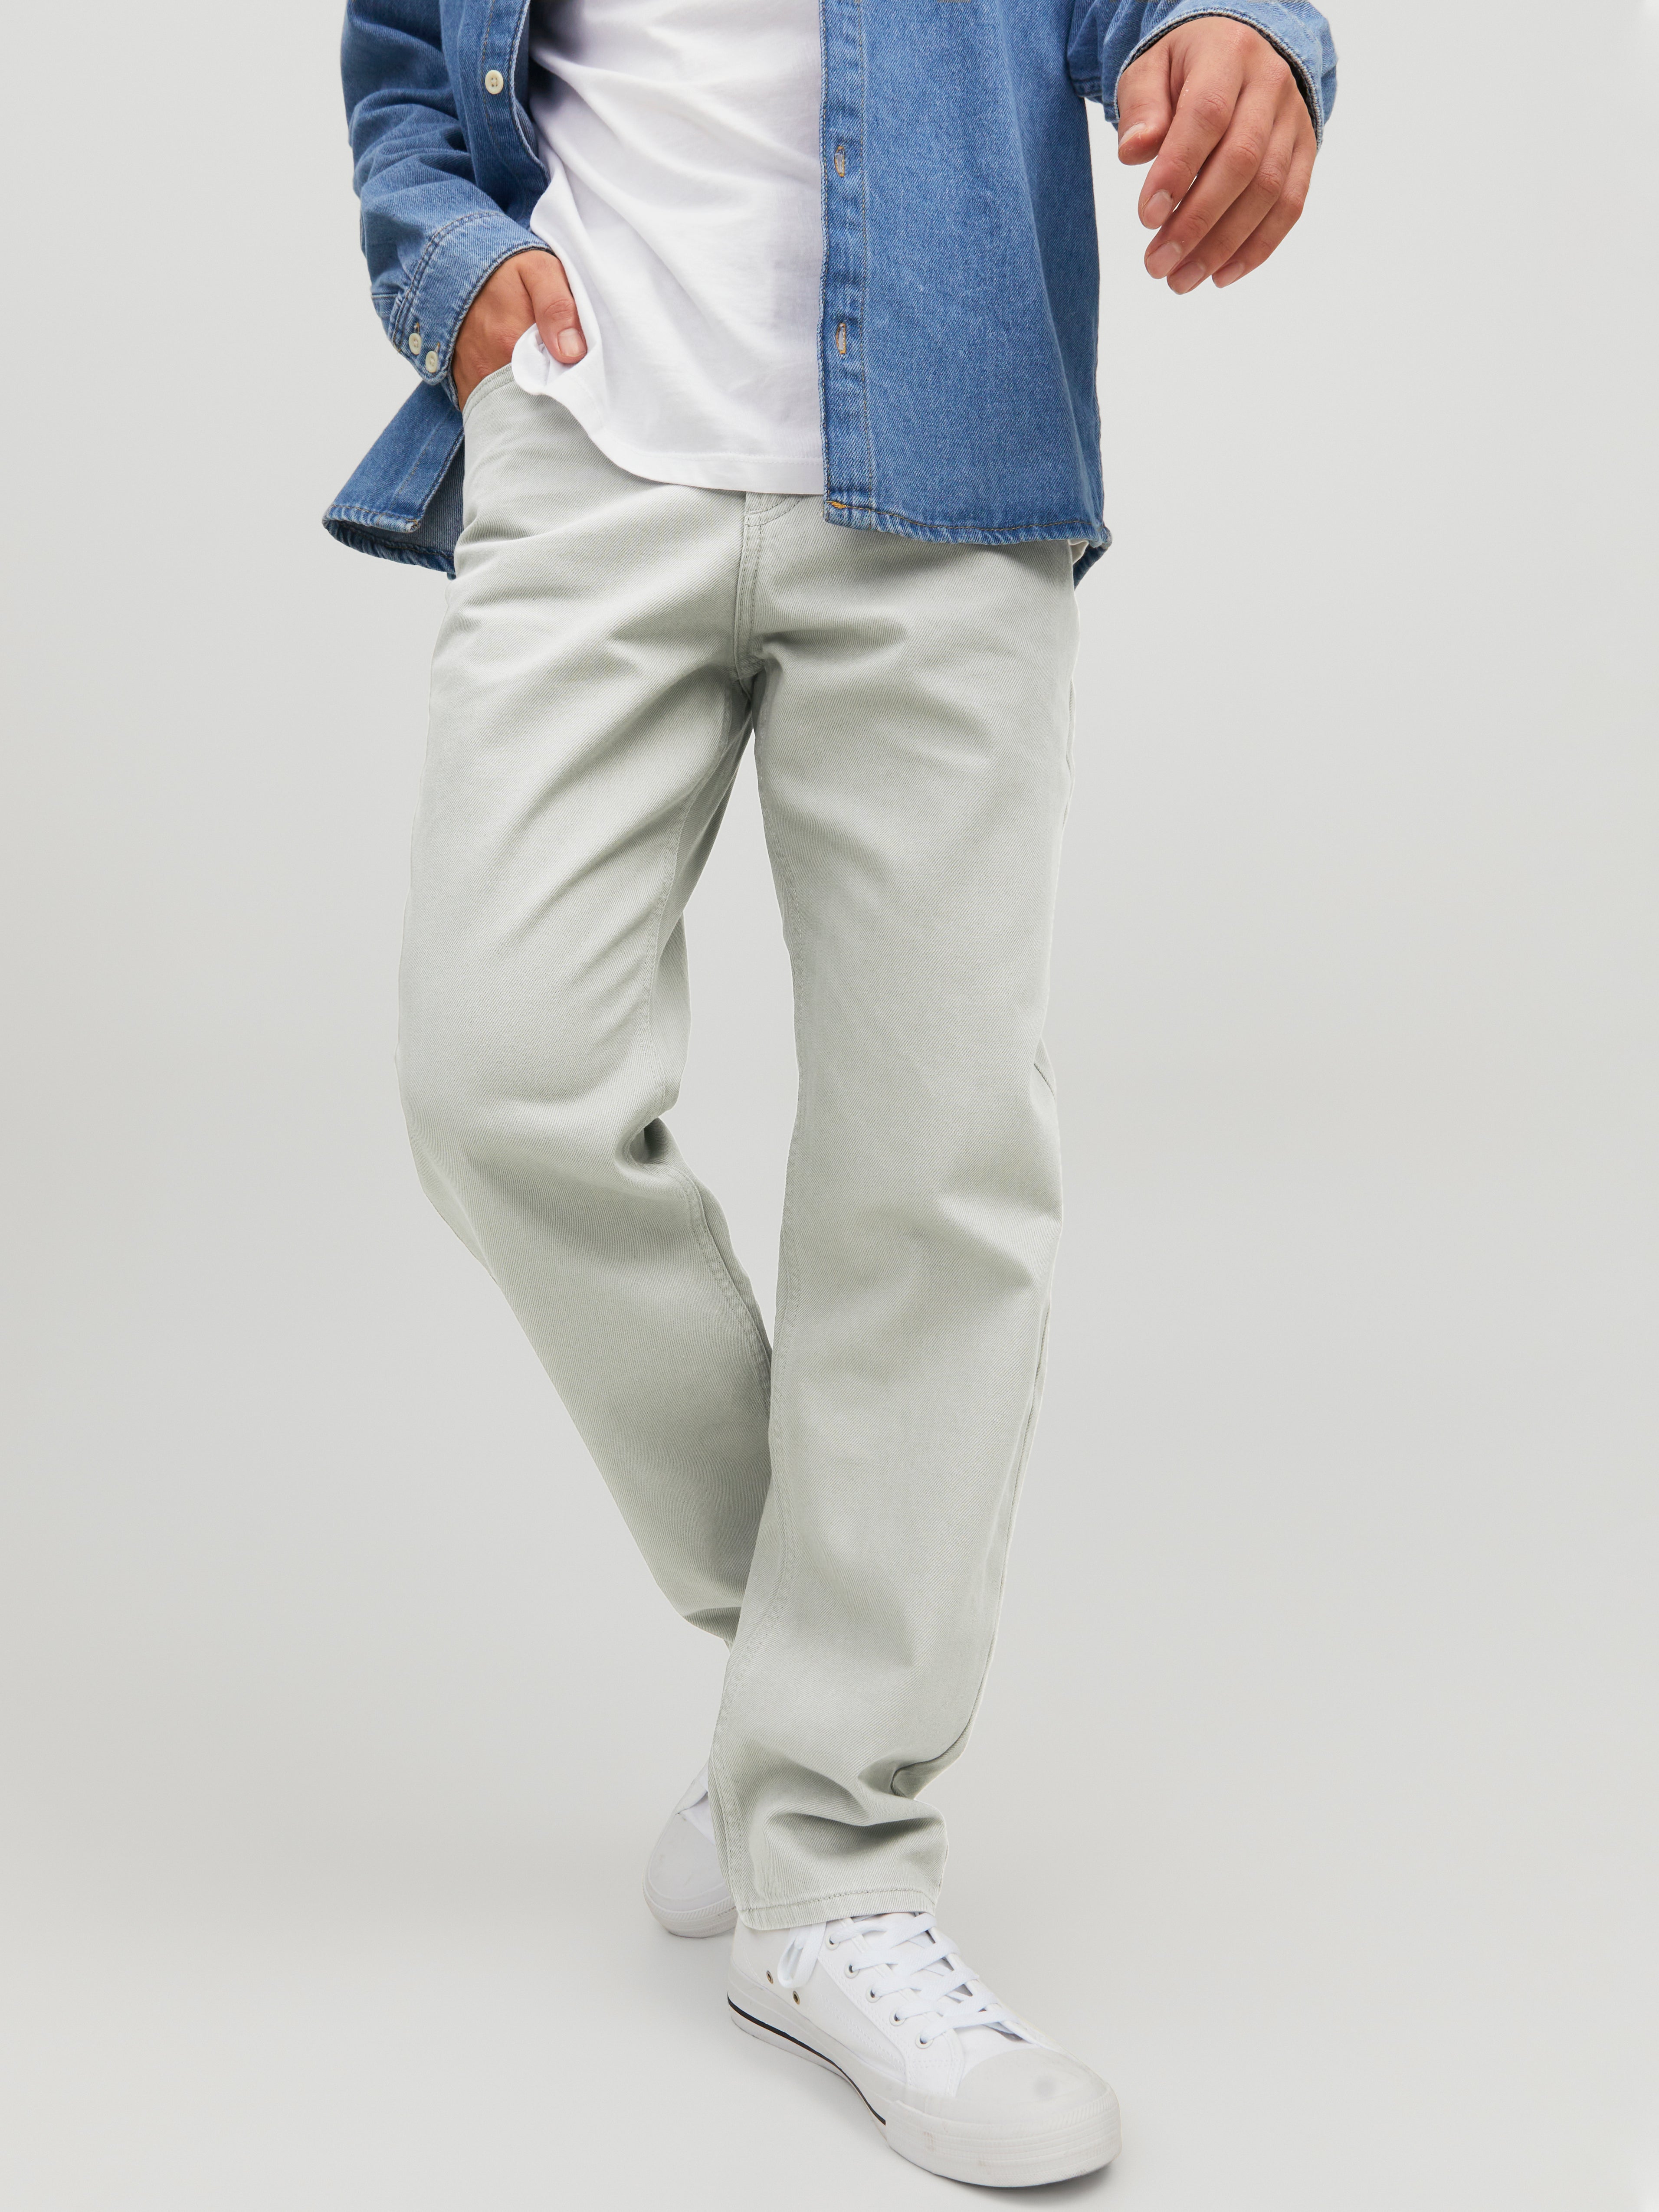 Regular Fit 5 Pocket trousers   Medium Grey   Jack & Jones®